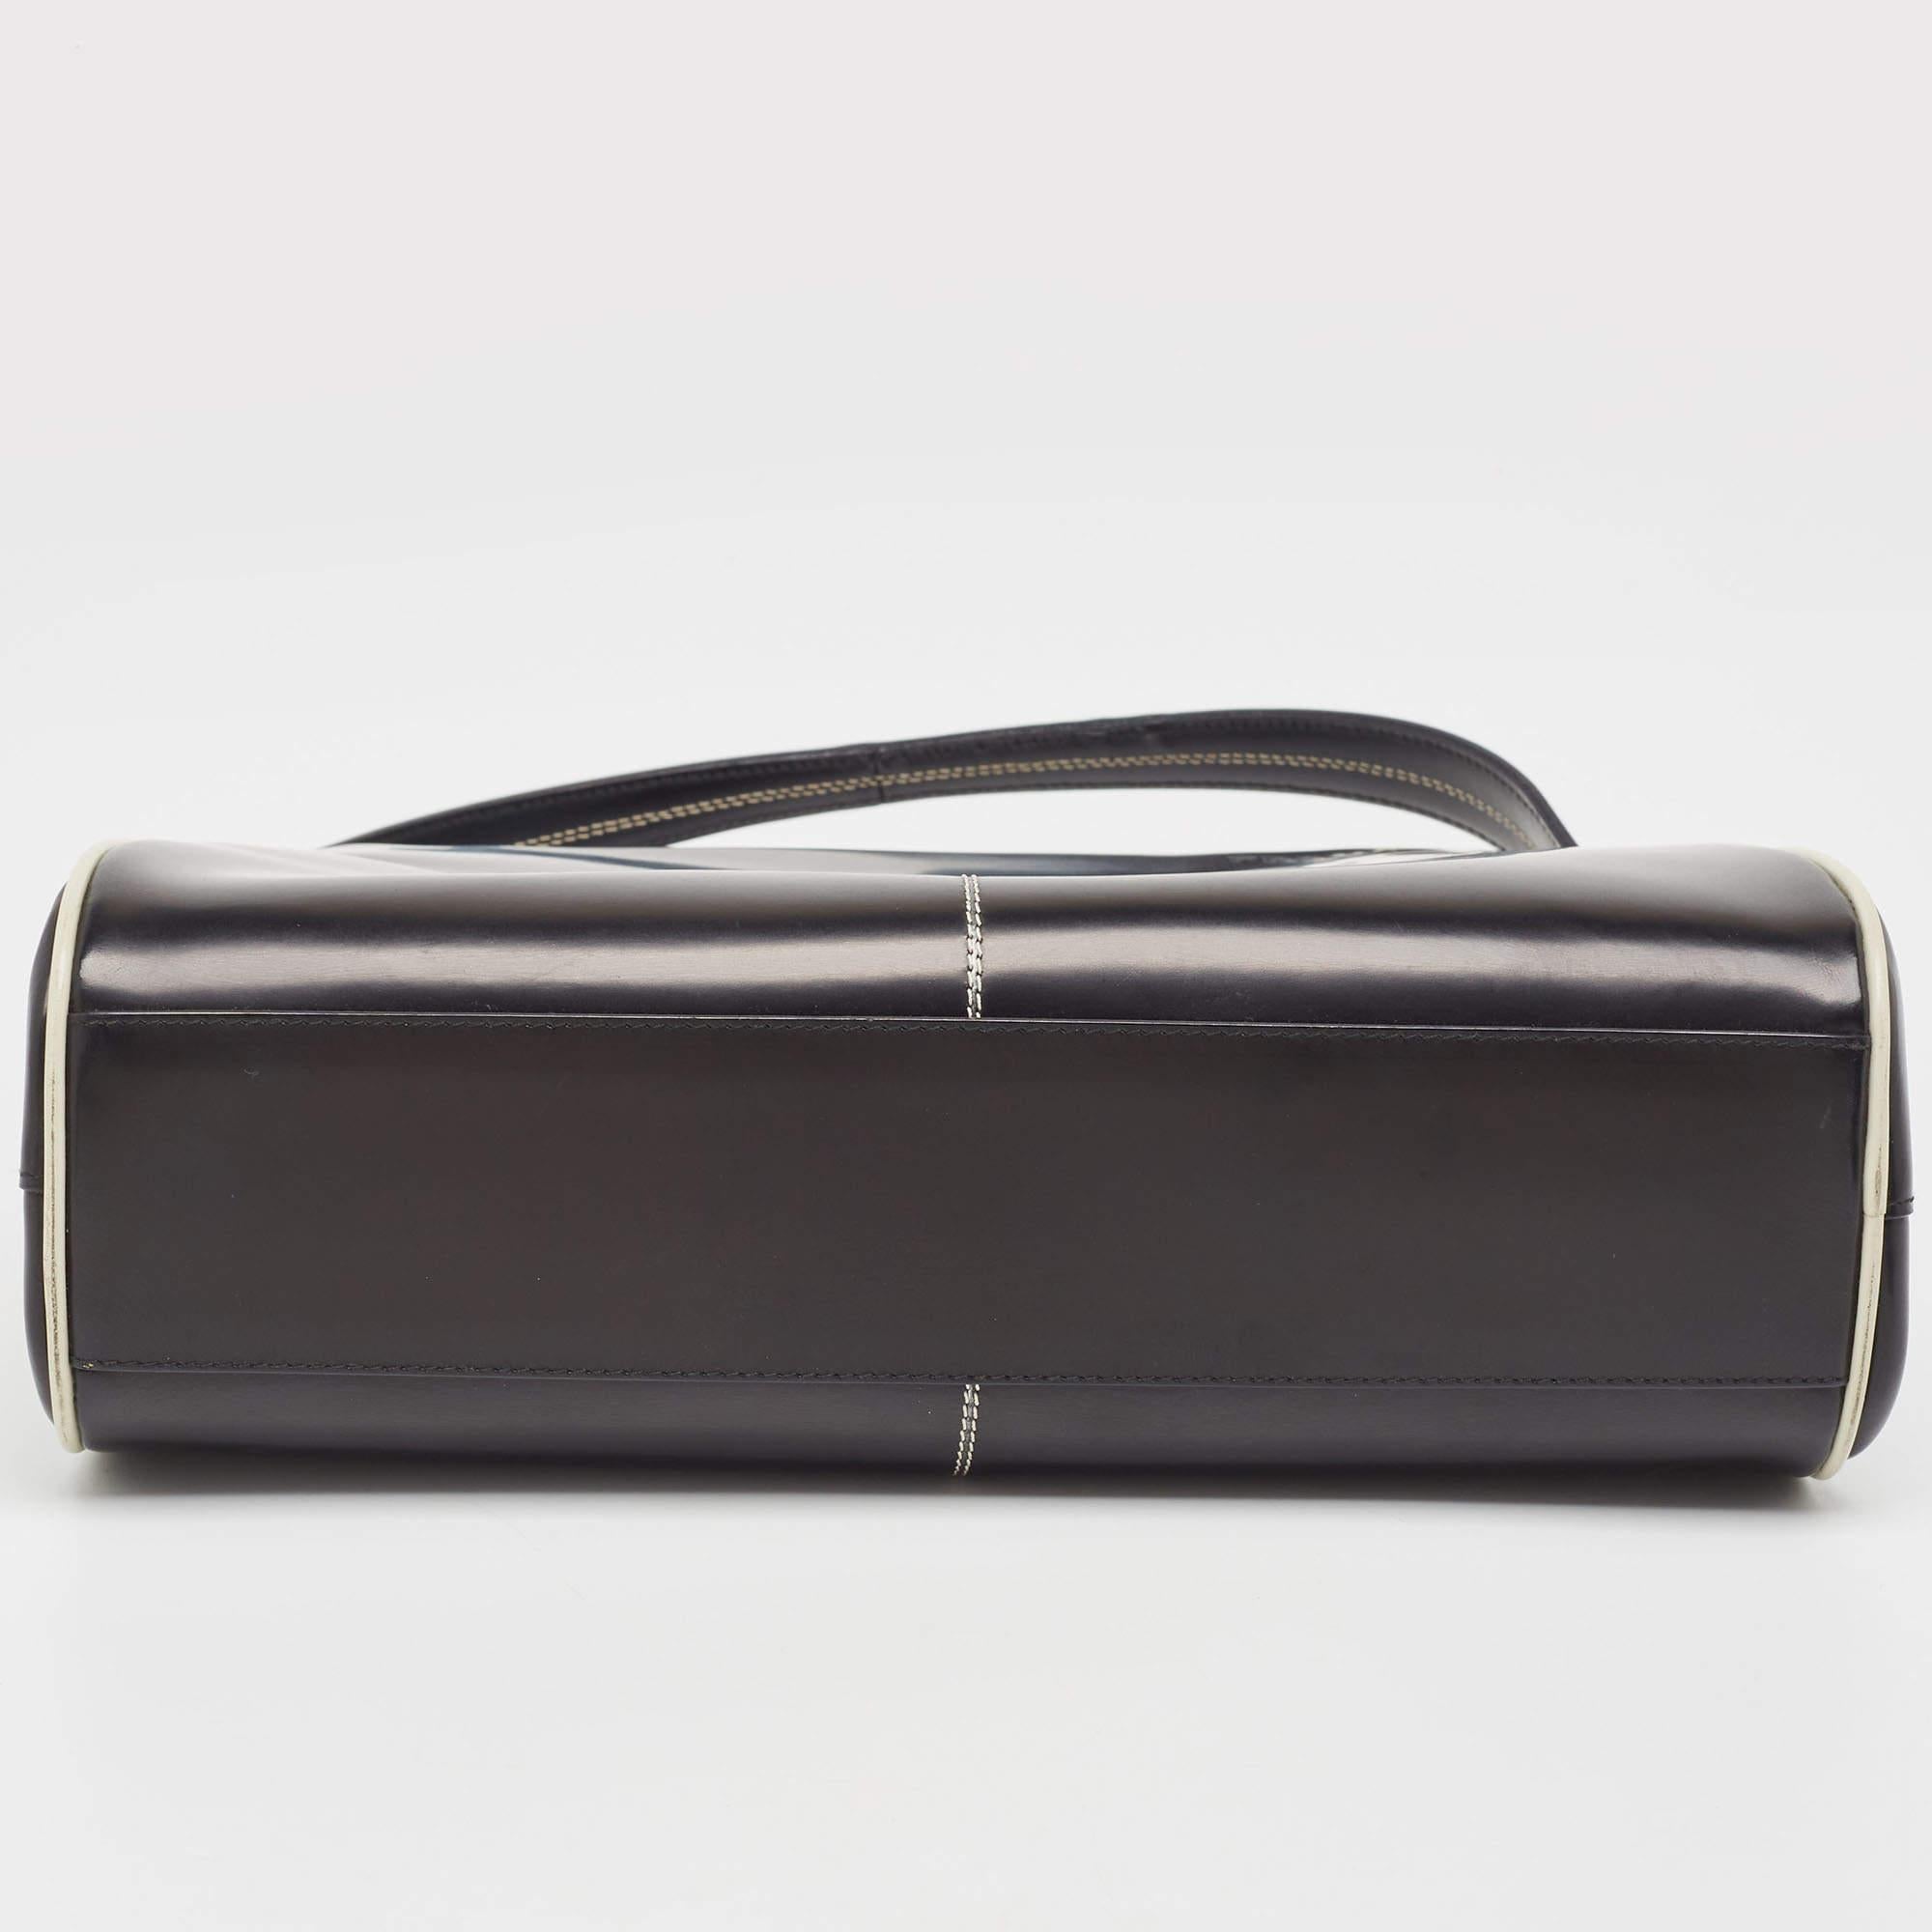 Prada Black/White Patent Leather Frame Top Handle Bag For Sale 2